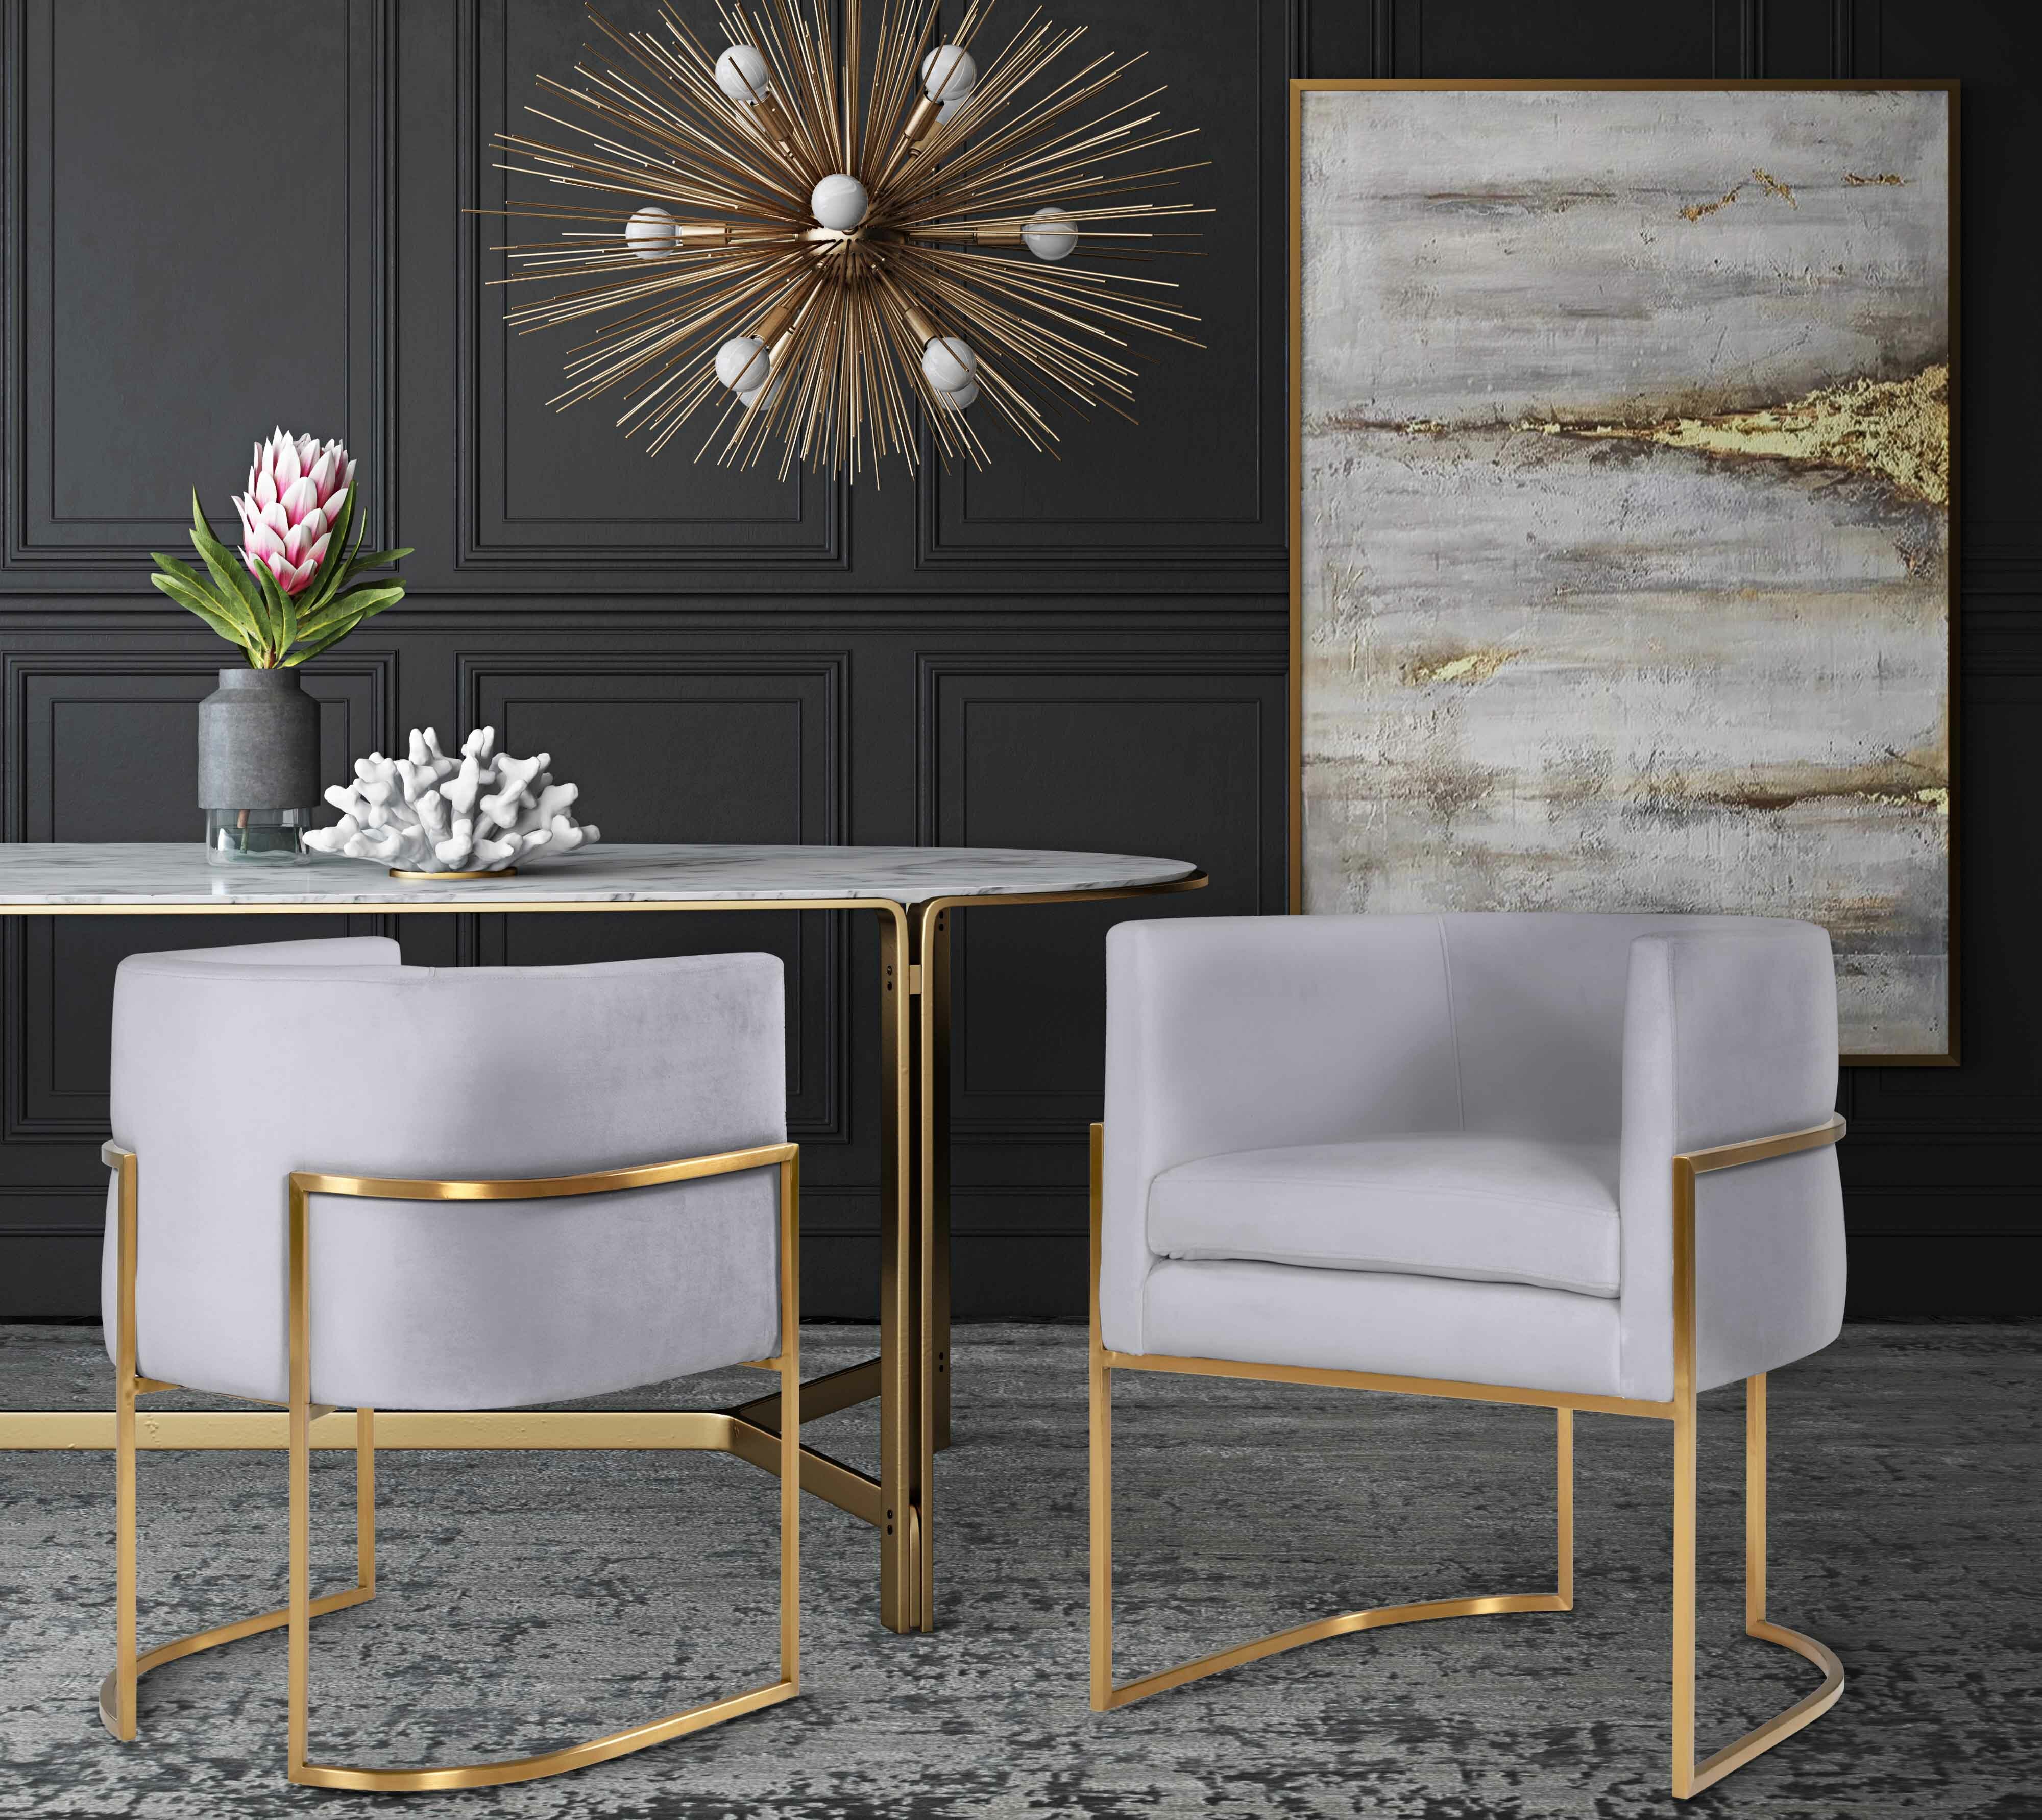 Inspiremehomedecor Giselle Grey Upholstered Dining Chair Reviews Wayfair